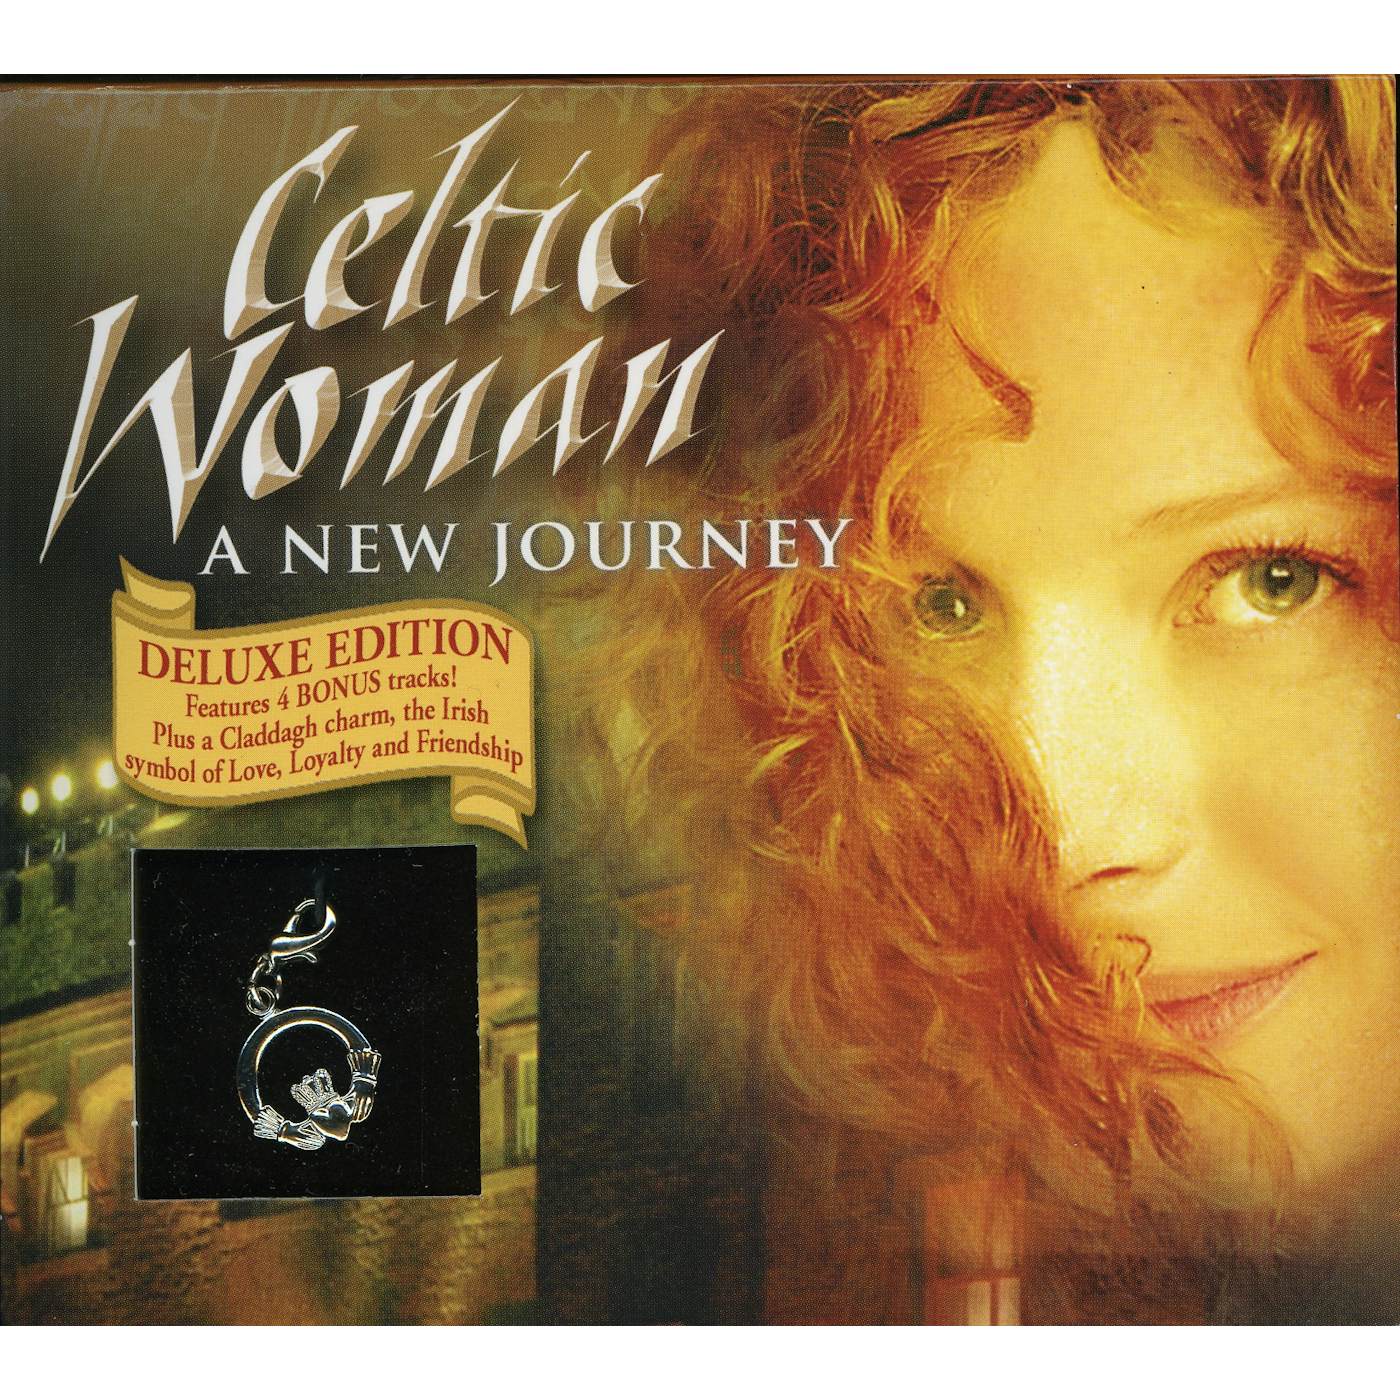 Celtic Woman NEW JOURNEY CD